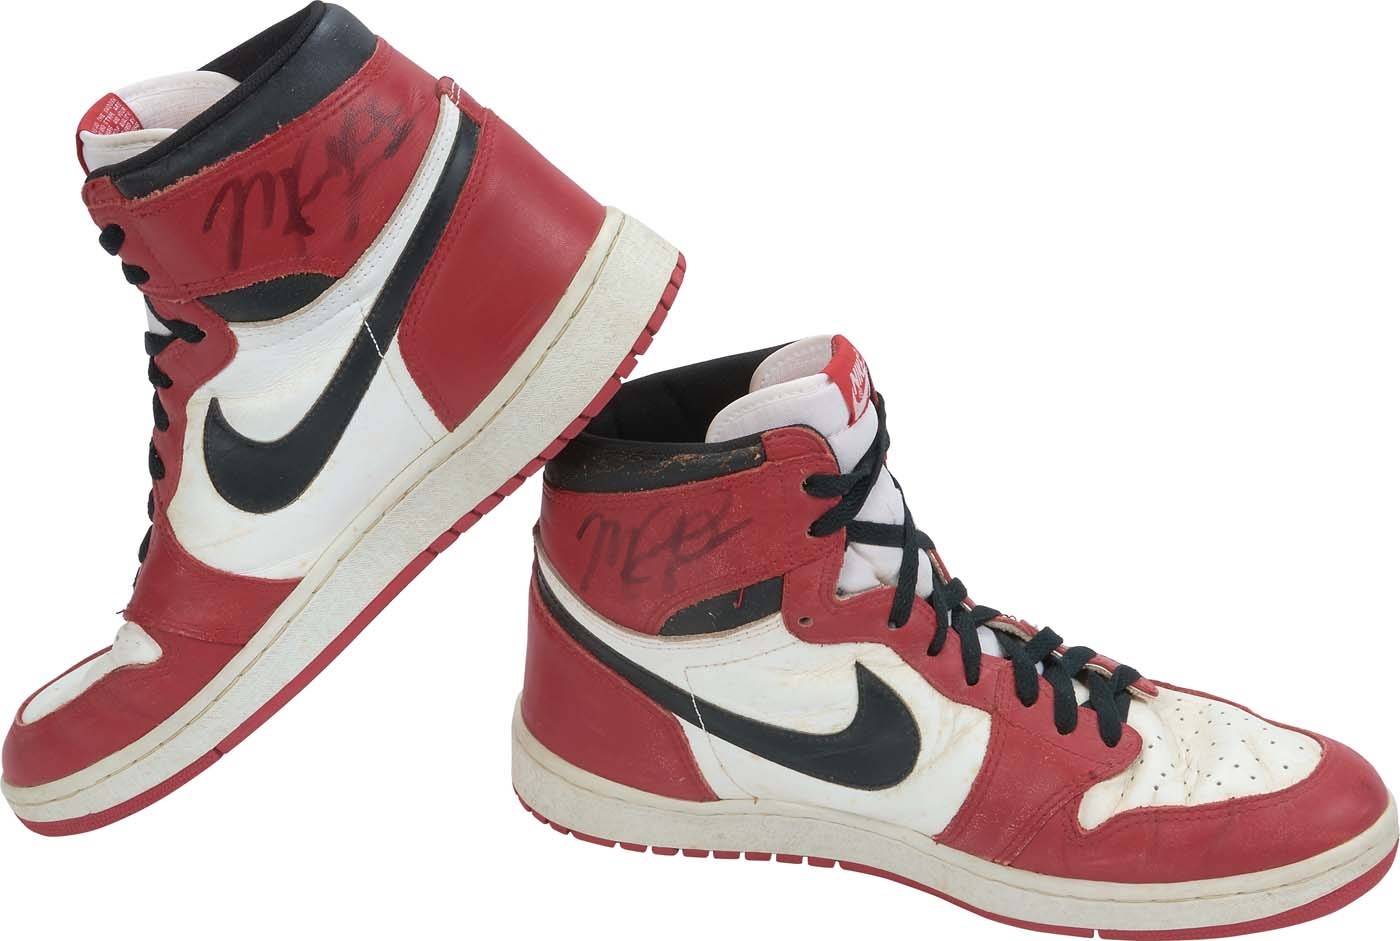 - 1985 Michael Jordan Signed Nike Air Jordan I Sneakers (JSA)